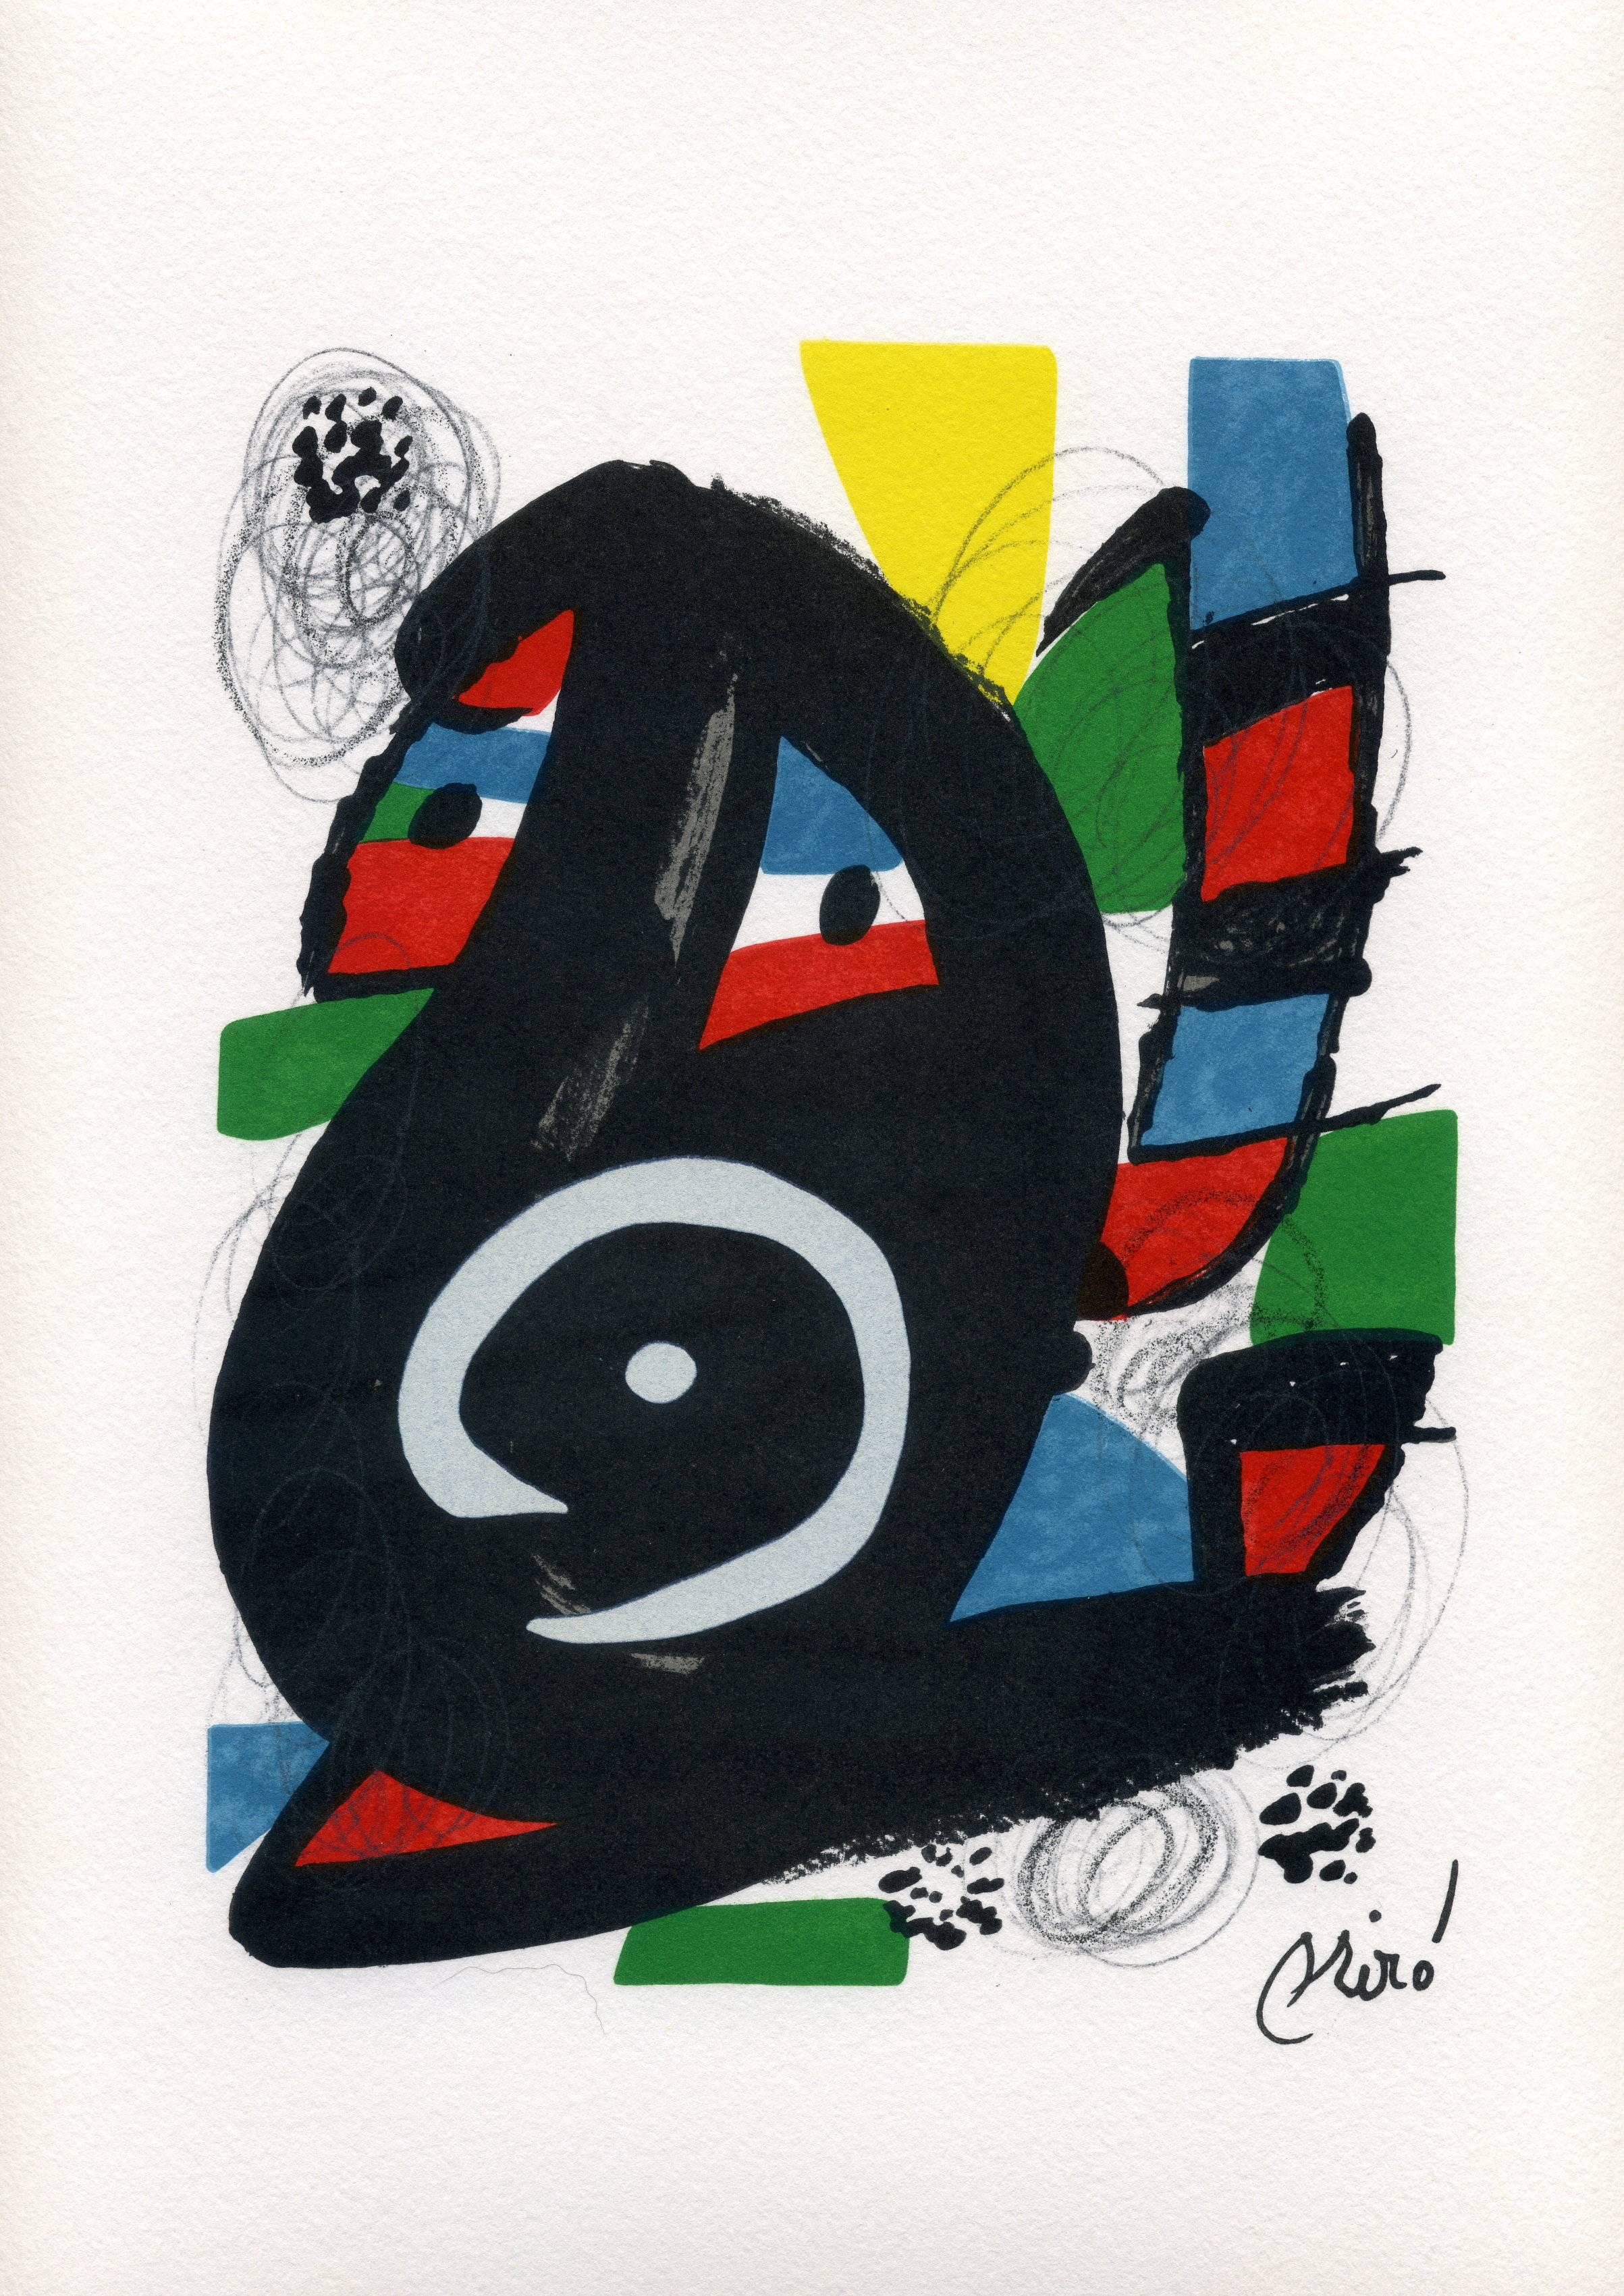 " La Mélodie acide " Modell Nr. 14
Lithographie des spanischen Künstlers Joan Miró i Ferrara (Barcelona 1893 - Palma de Mallorca 1983)
Aus der Mappe "La Mélodie acide" mit 14 Farblithographien.
Technik: Lithografie, signiert in der Platte, gedruckt